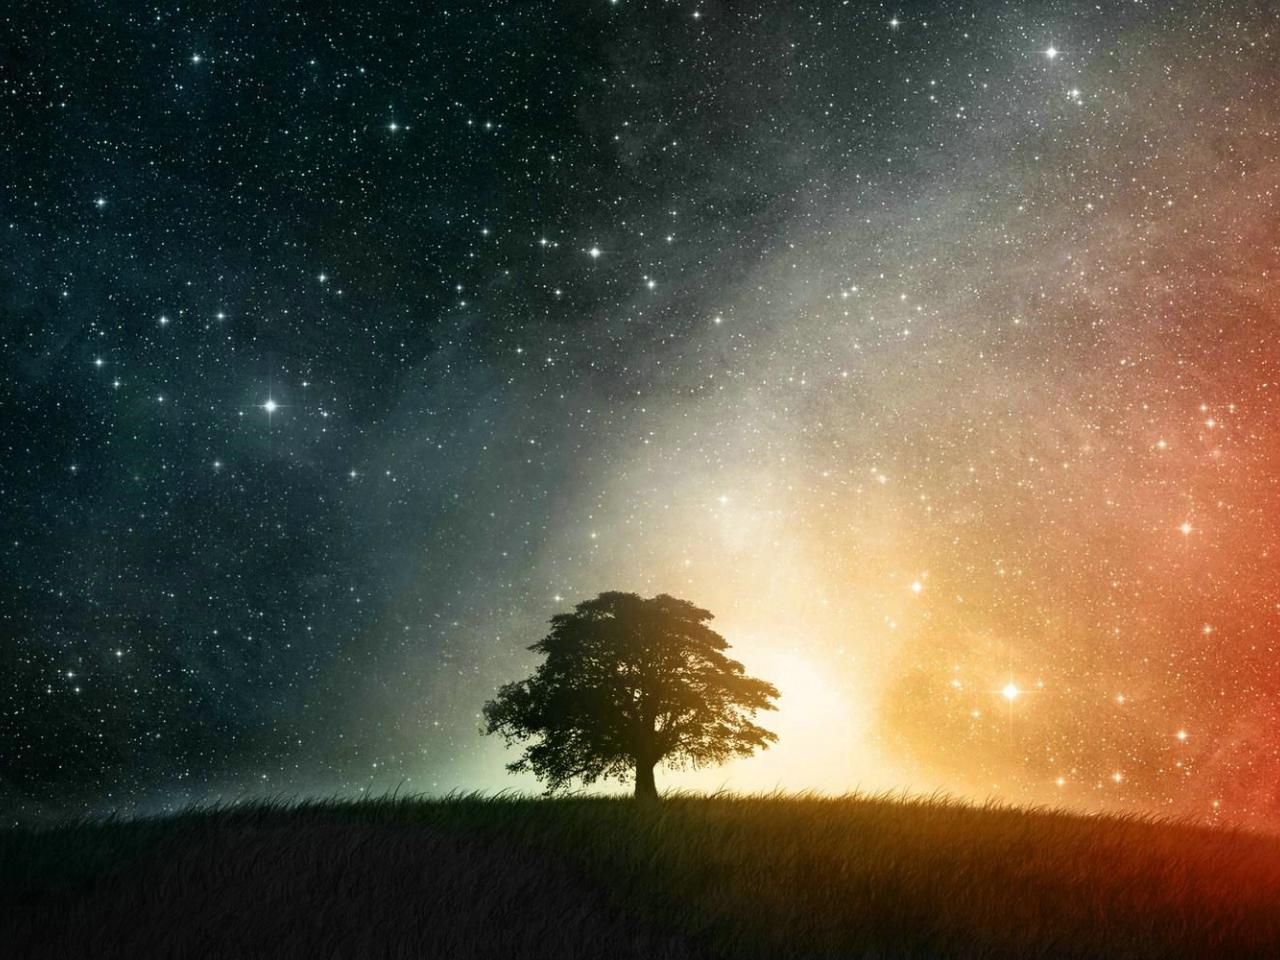 обои Ночное усыпанное звездное небо,а под небом дерево фото